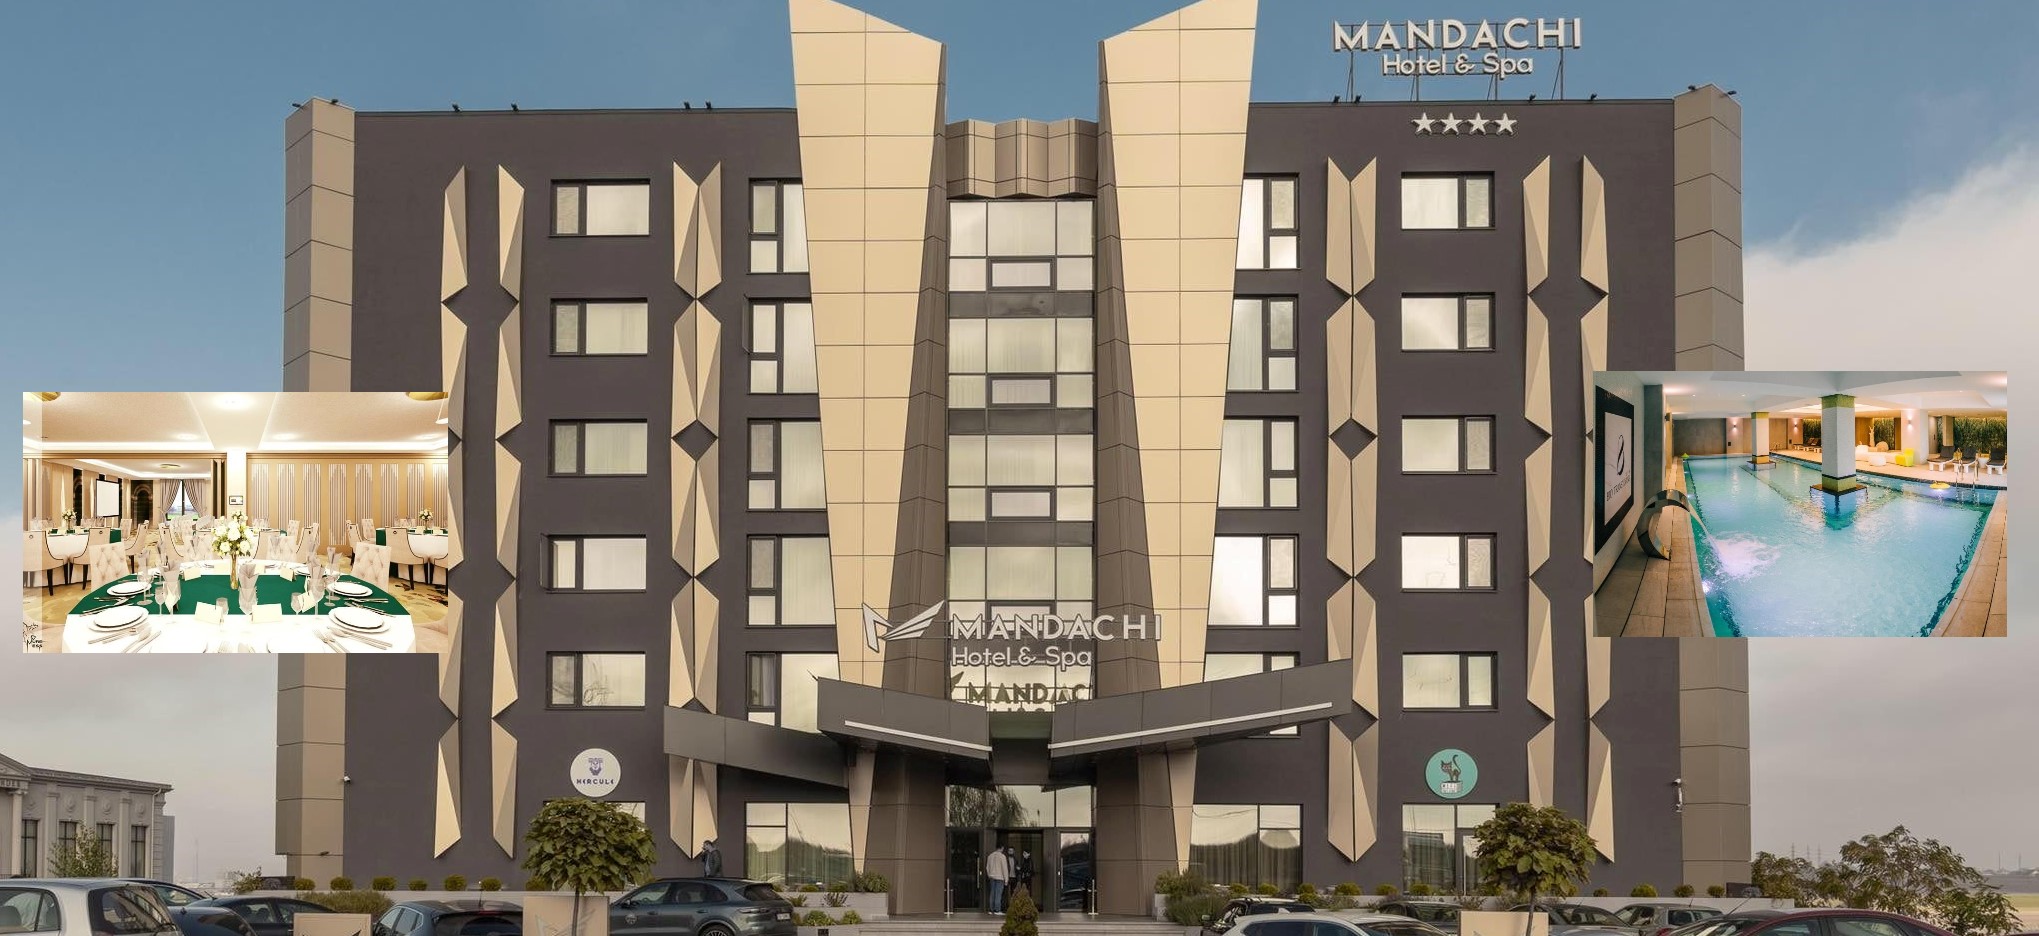 Parteneriat SNPPC – Hotel MANDACHI &Restaurantele SPARTAN  din Suceava-discount 15%